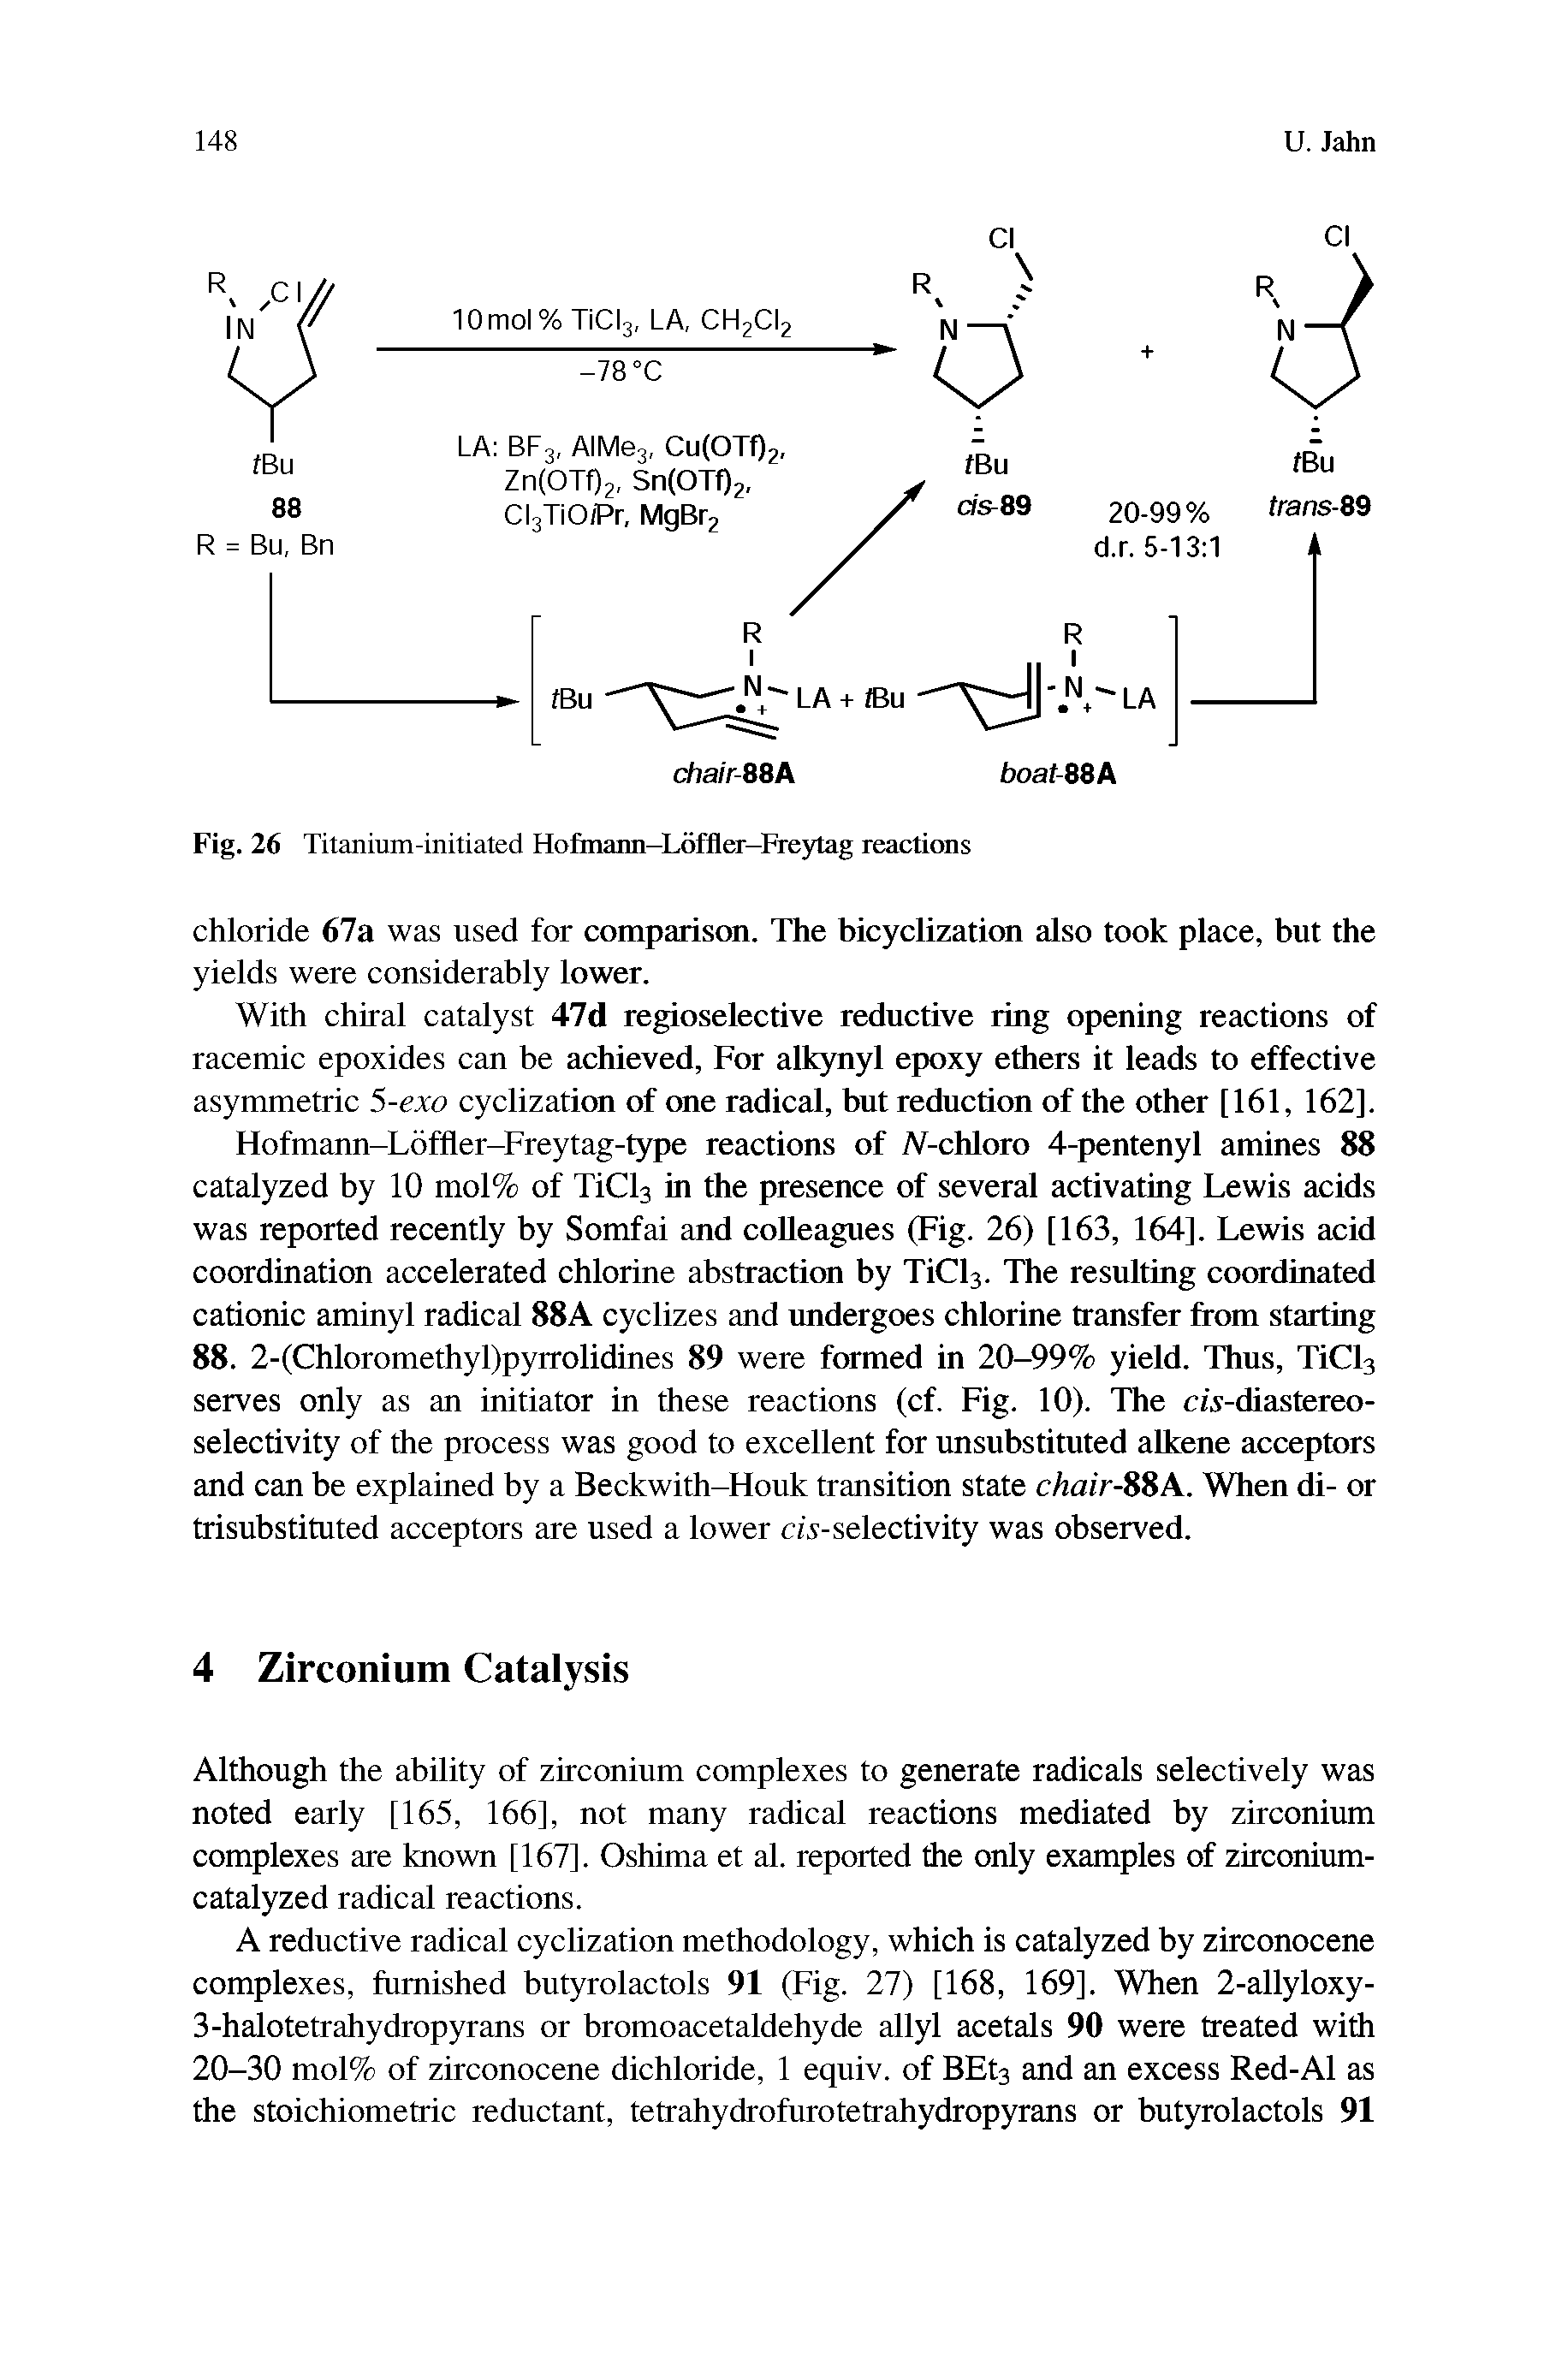 Fig. 26 Titanium-initiated Hofmann-Loffler-Freytag reactions...